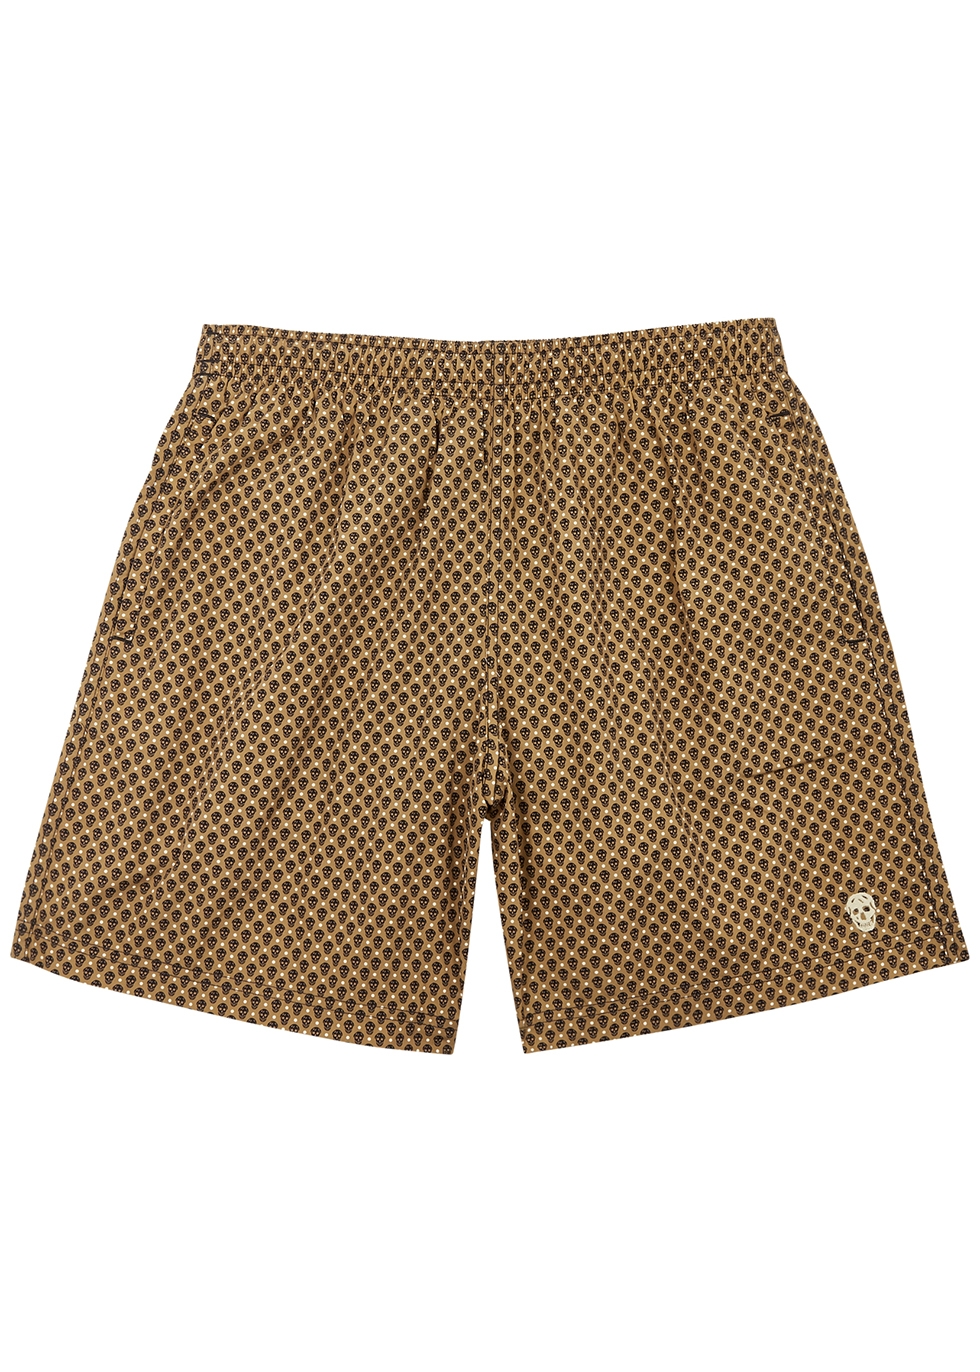 Brown printed shell swim shorts